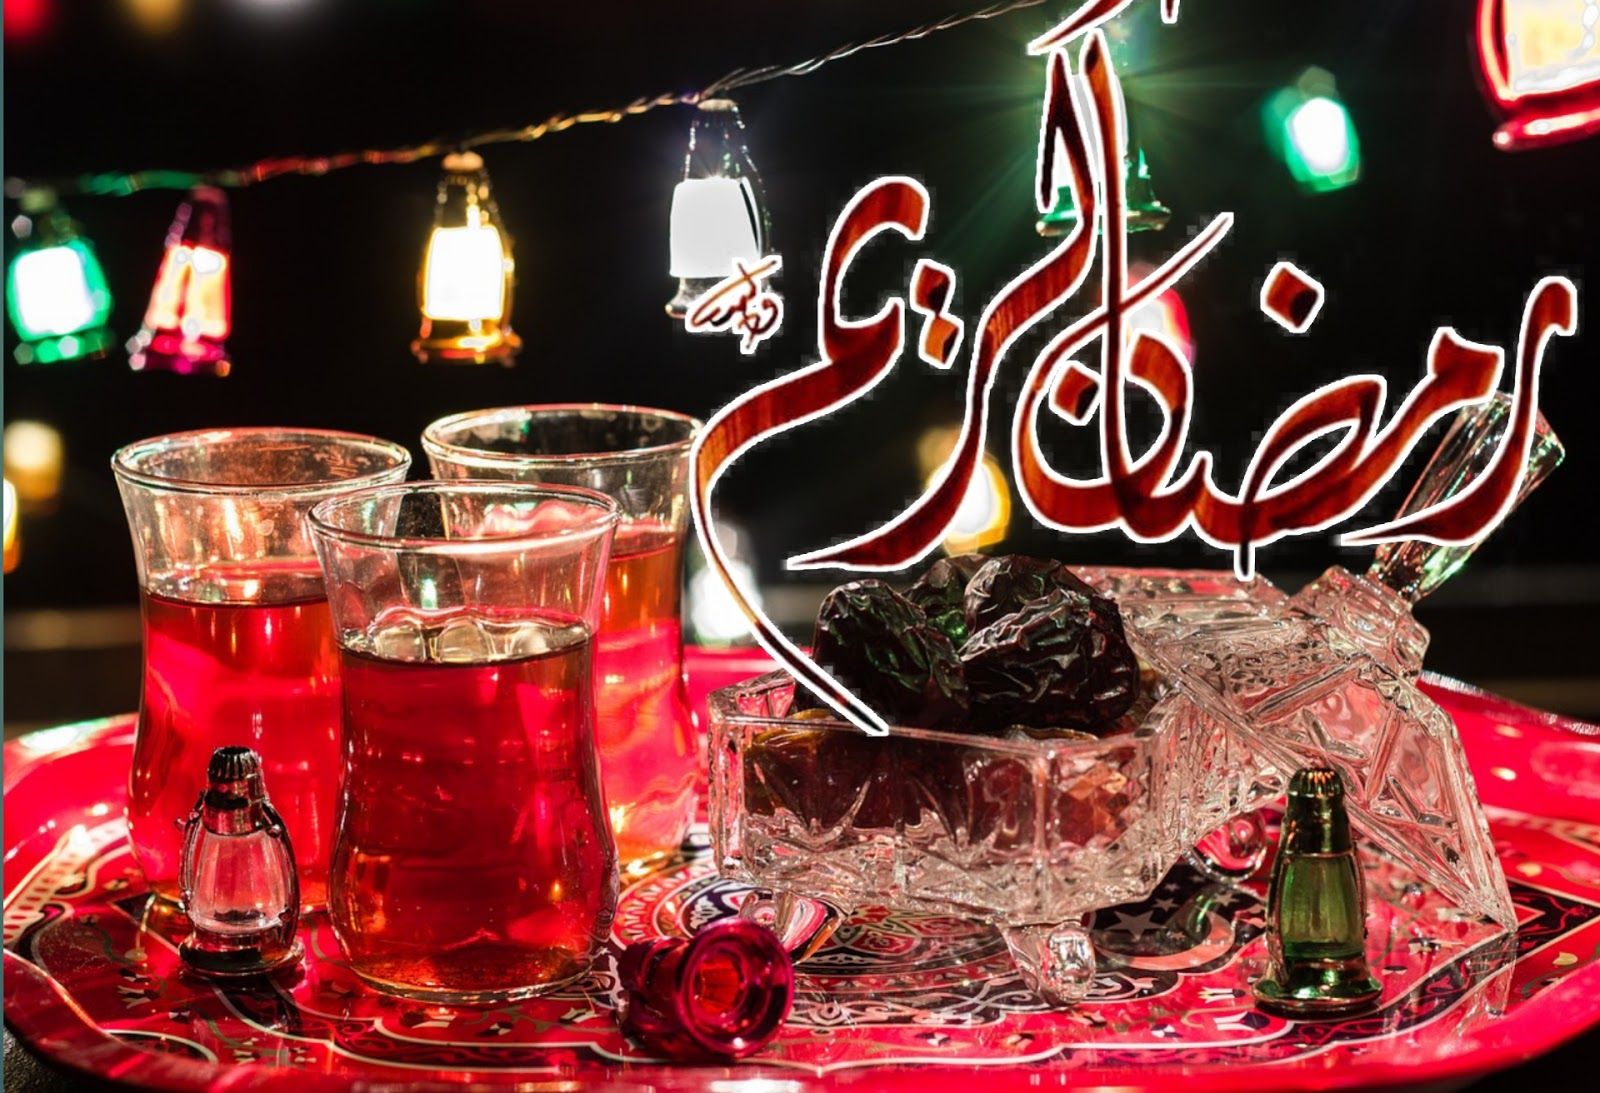 Ramadan Mubarak New Picture Free Download wallpaper greeting 2021